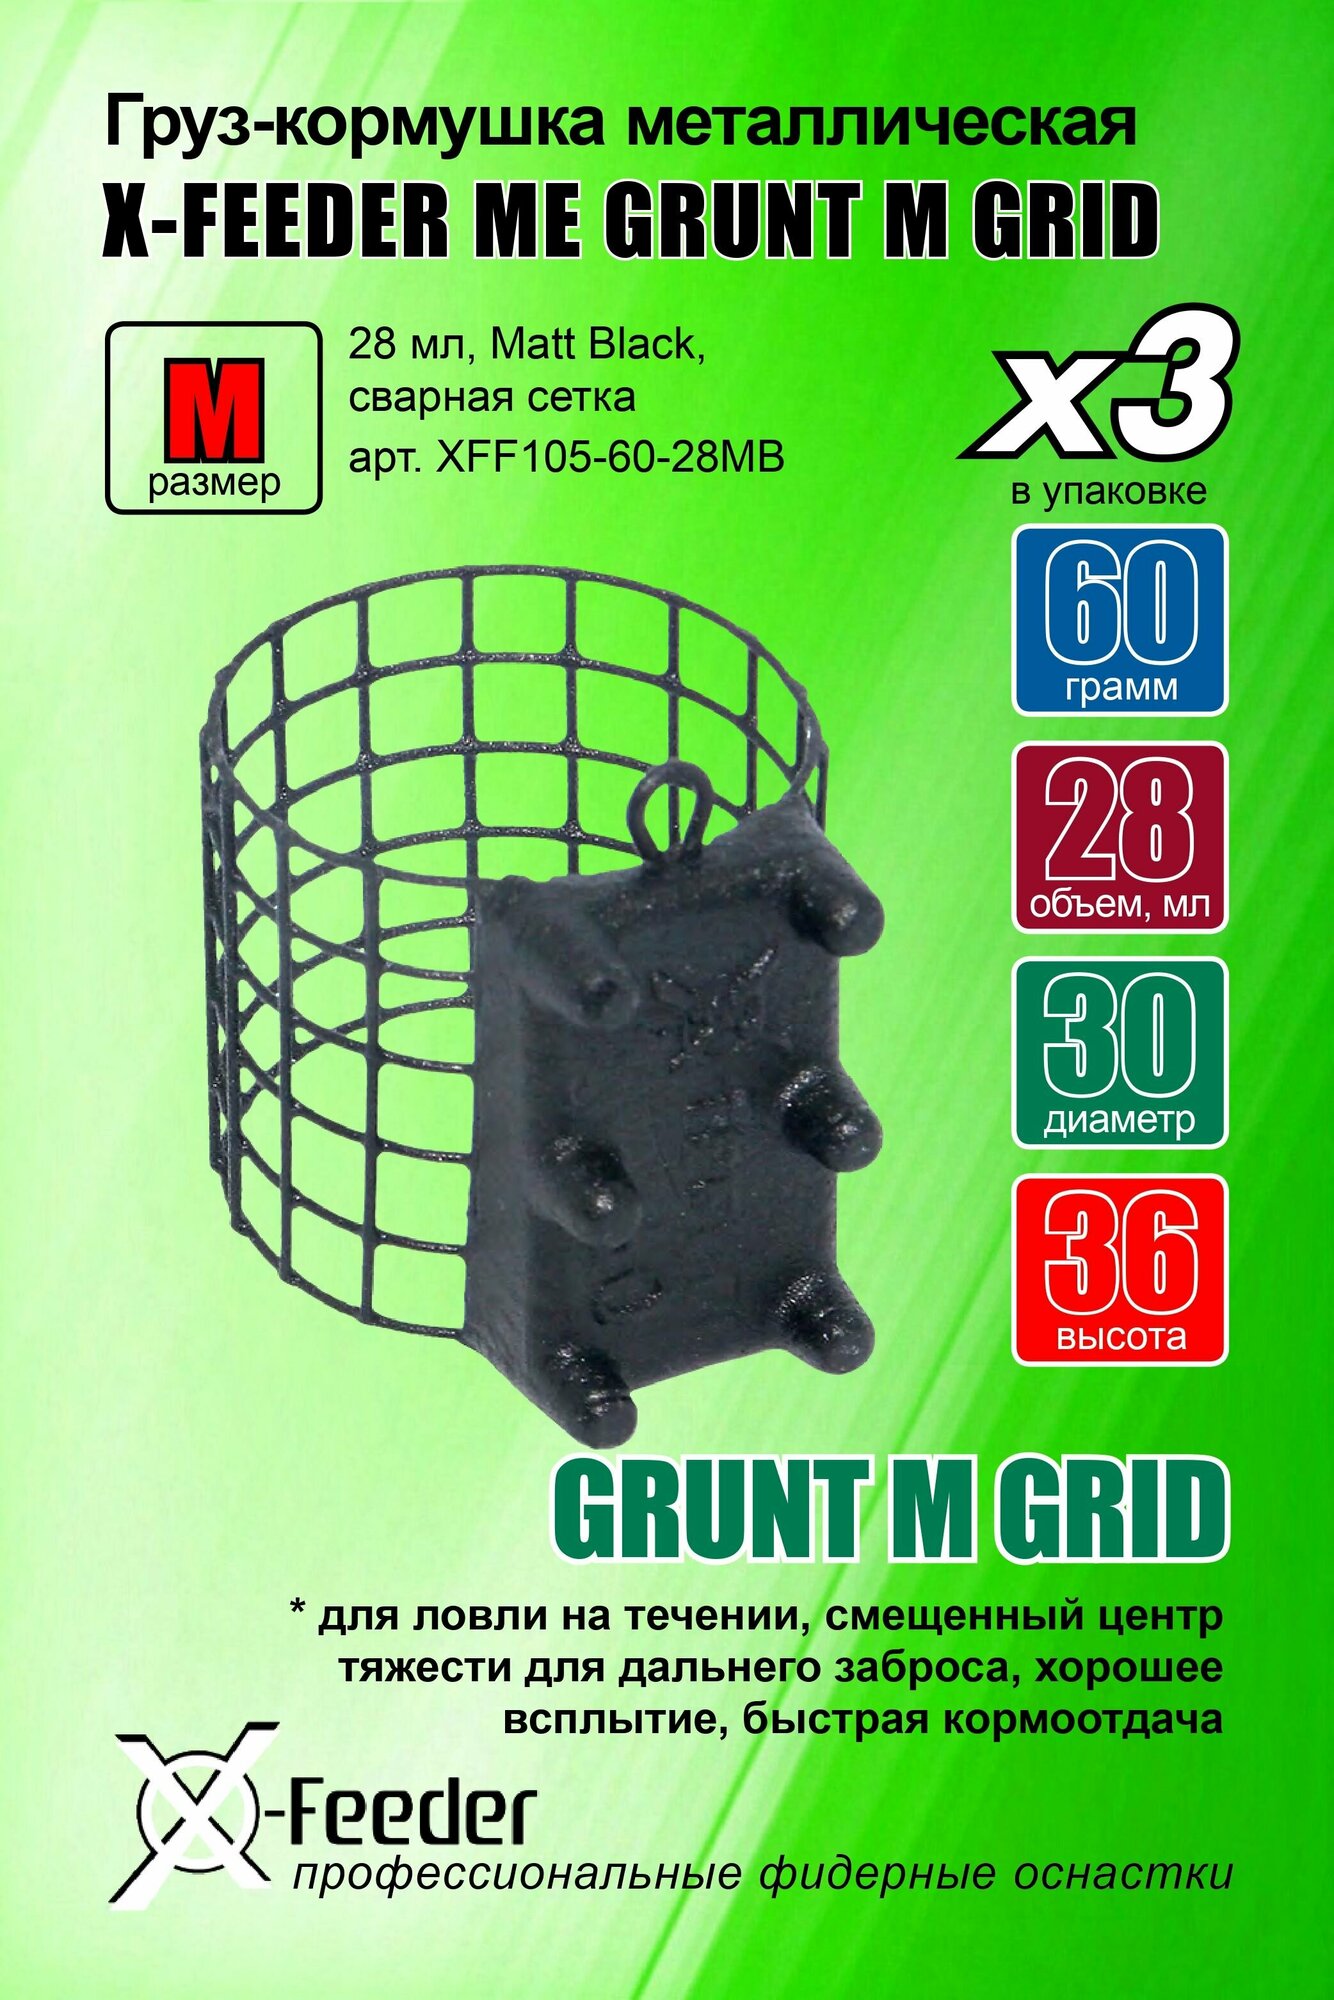 Груз-кормушка мет. X-FEEDER ME GRUNT M GRID 060 г (28 мл, цвет Matt Black, сварная сетка), в упаковке 3 штуки.